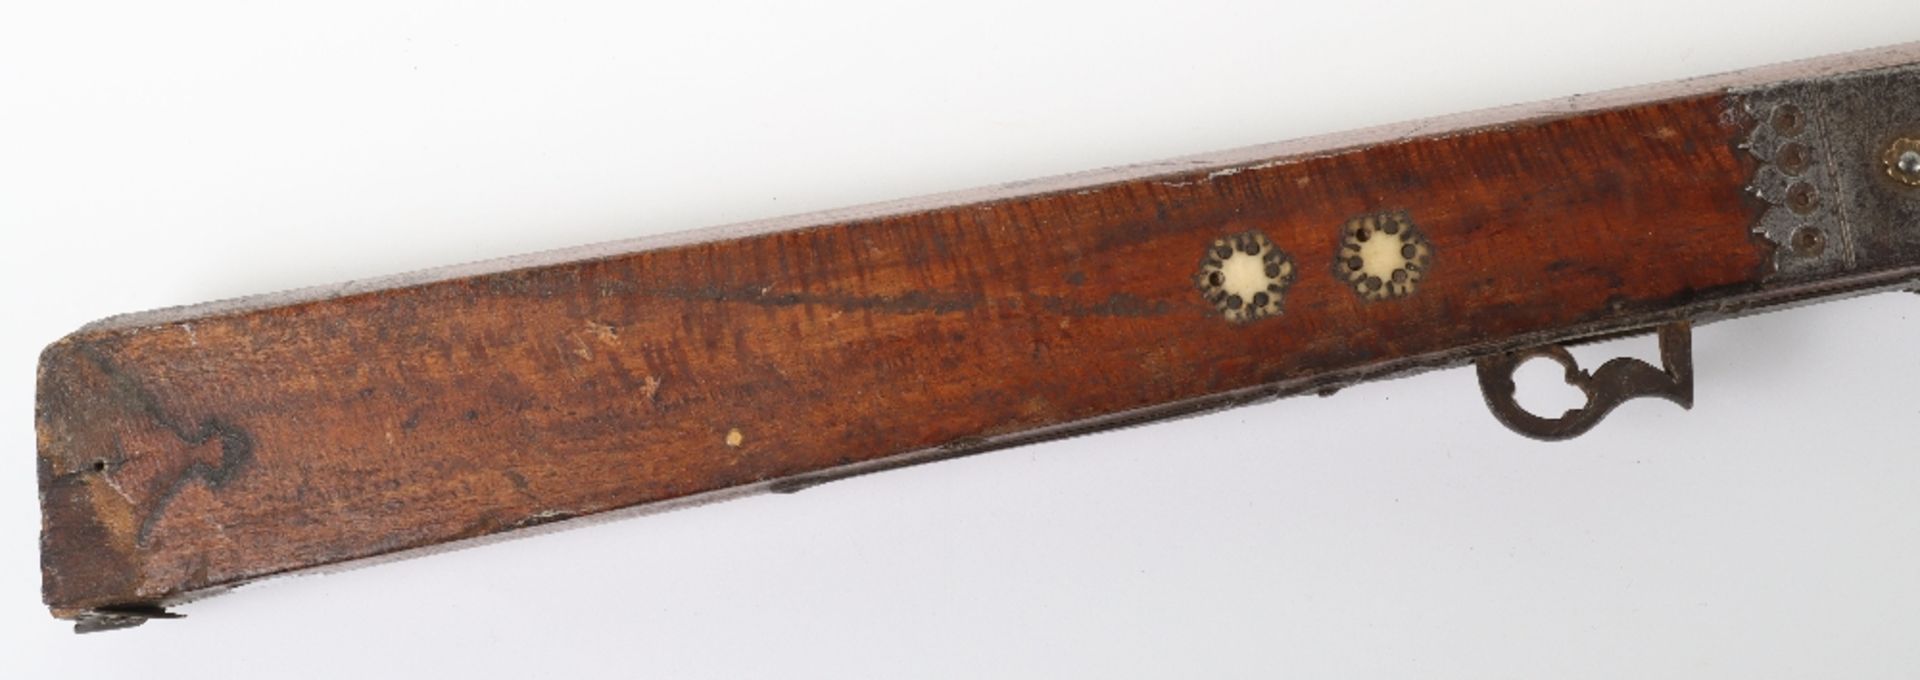 32 Bore Indian Matchlock Gun Torador, Probably Punjab First Half of the 19th Century - Image 5 of 11